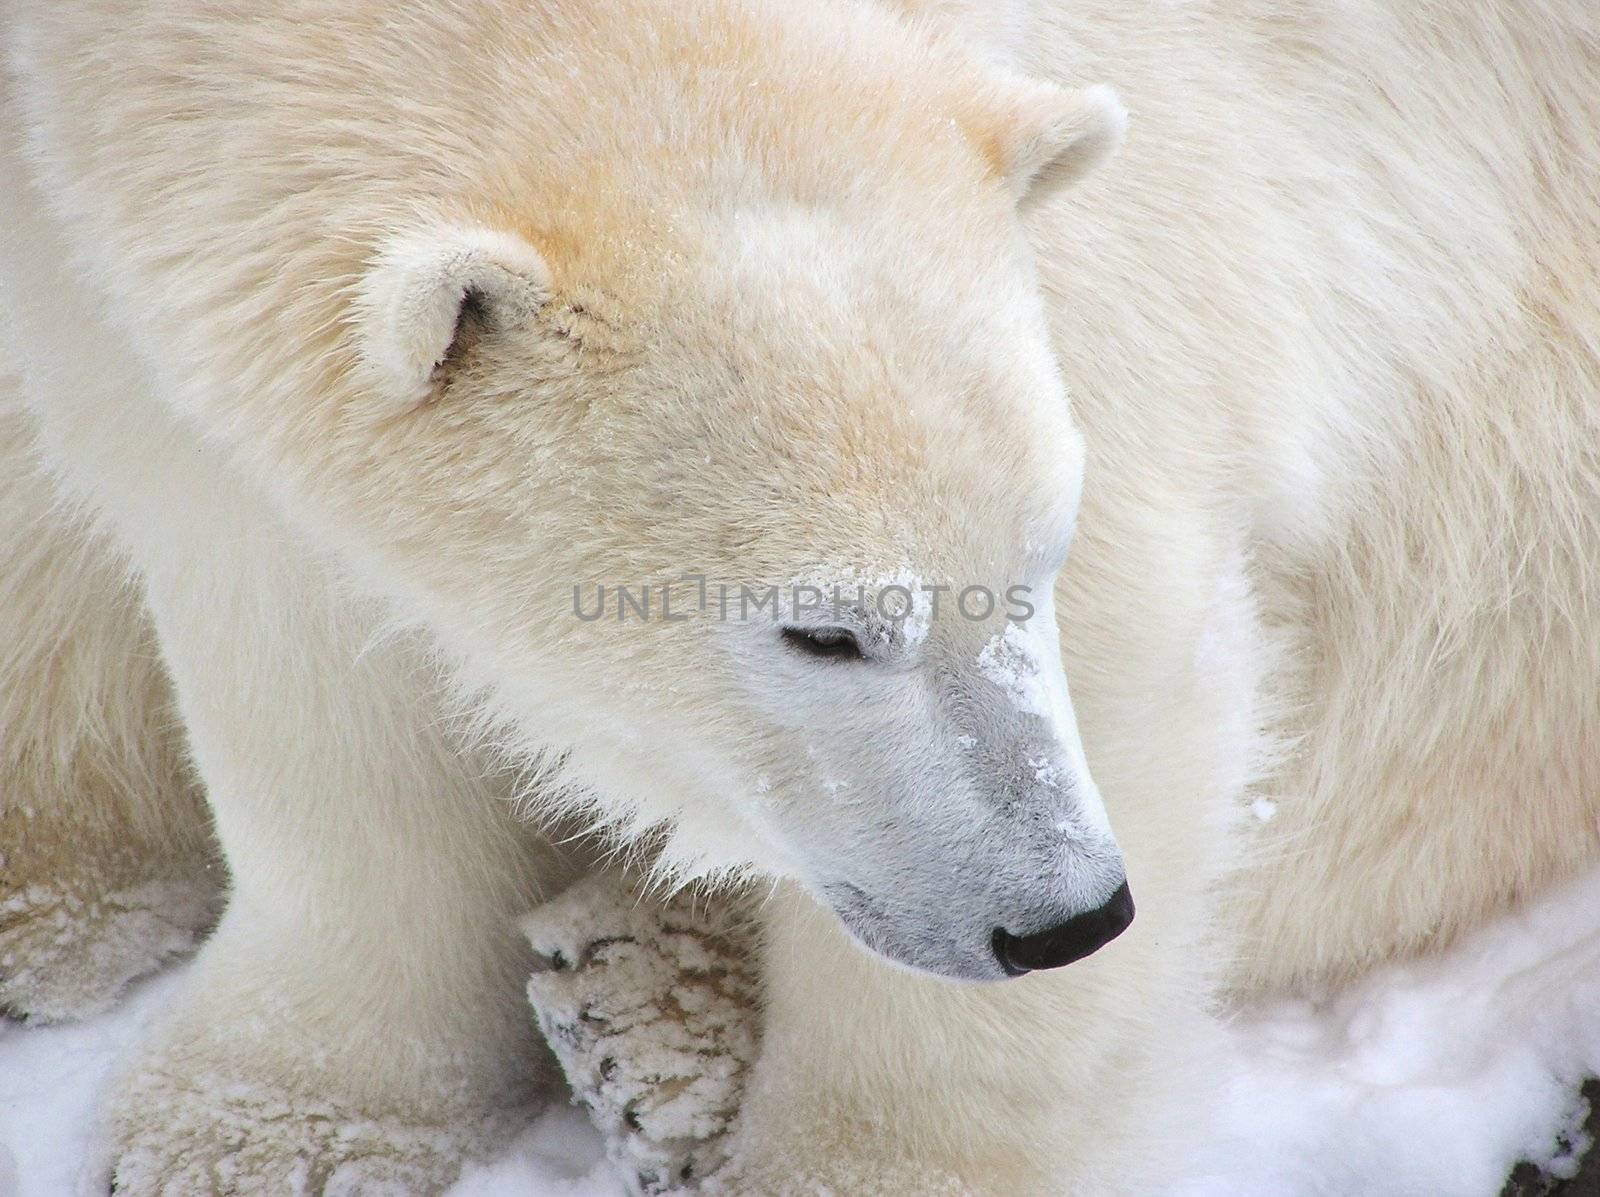 Polar bear close-up by Mirage3